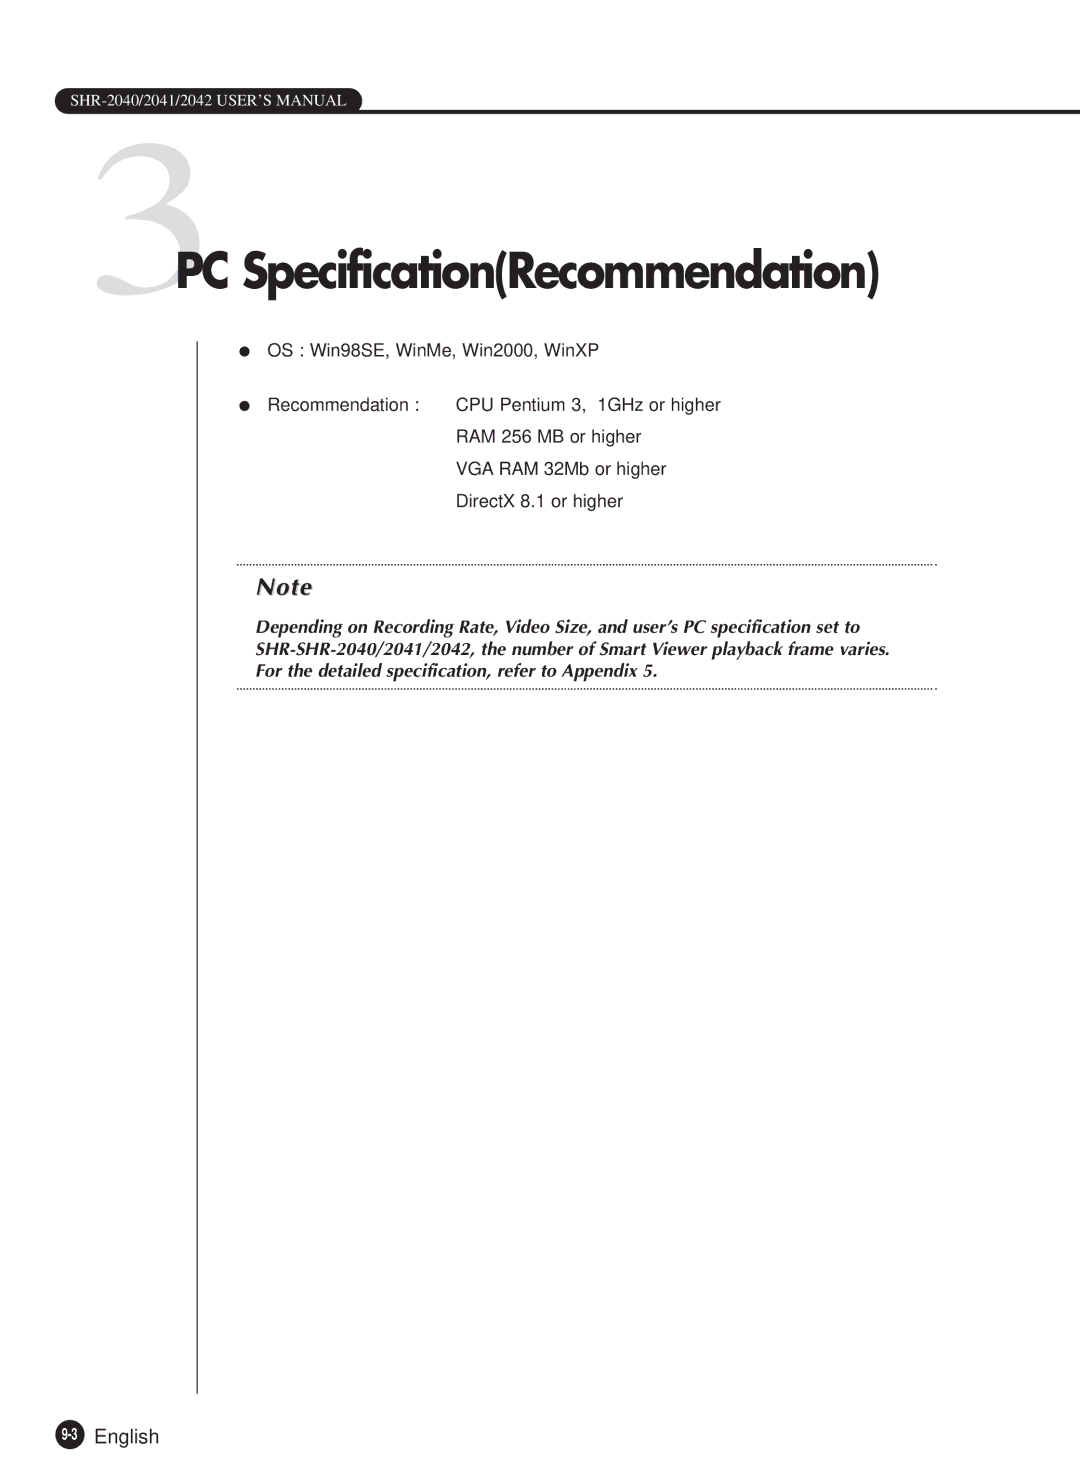 Samsung SHR-2040N, SHR-2040P manual 3PC SpecificationRecommendation, 3English 